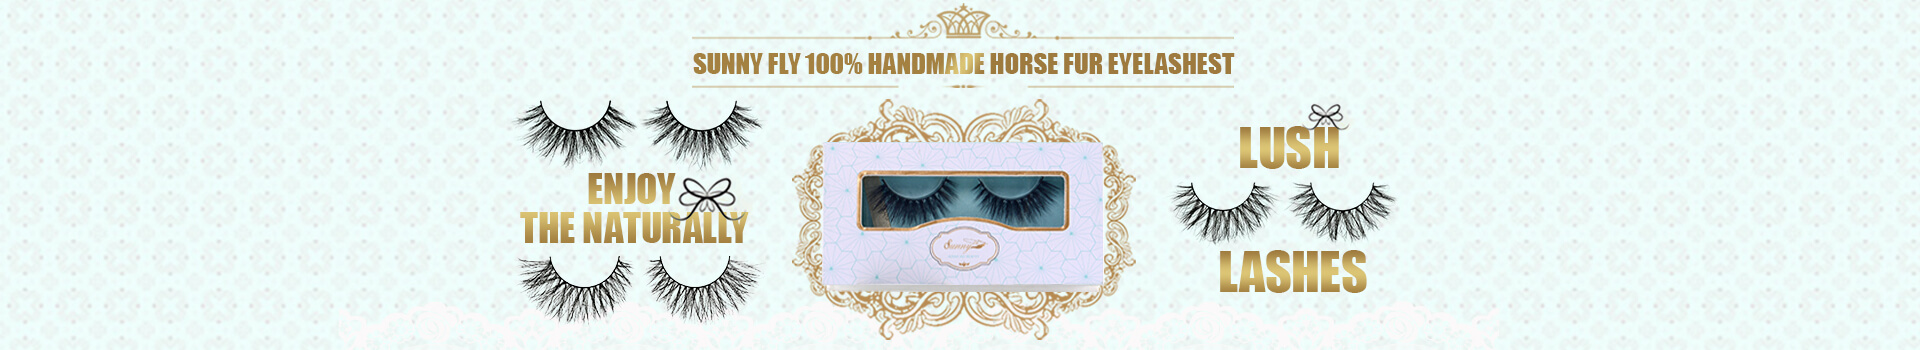 Real Horse Fur Eyesashes HF04